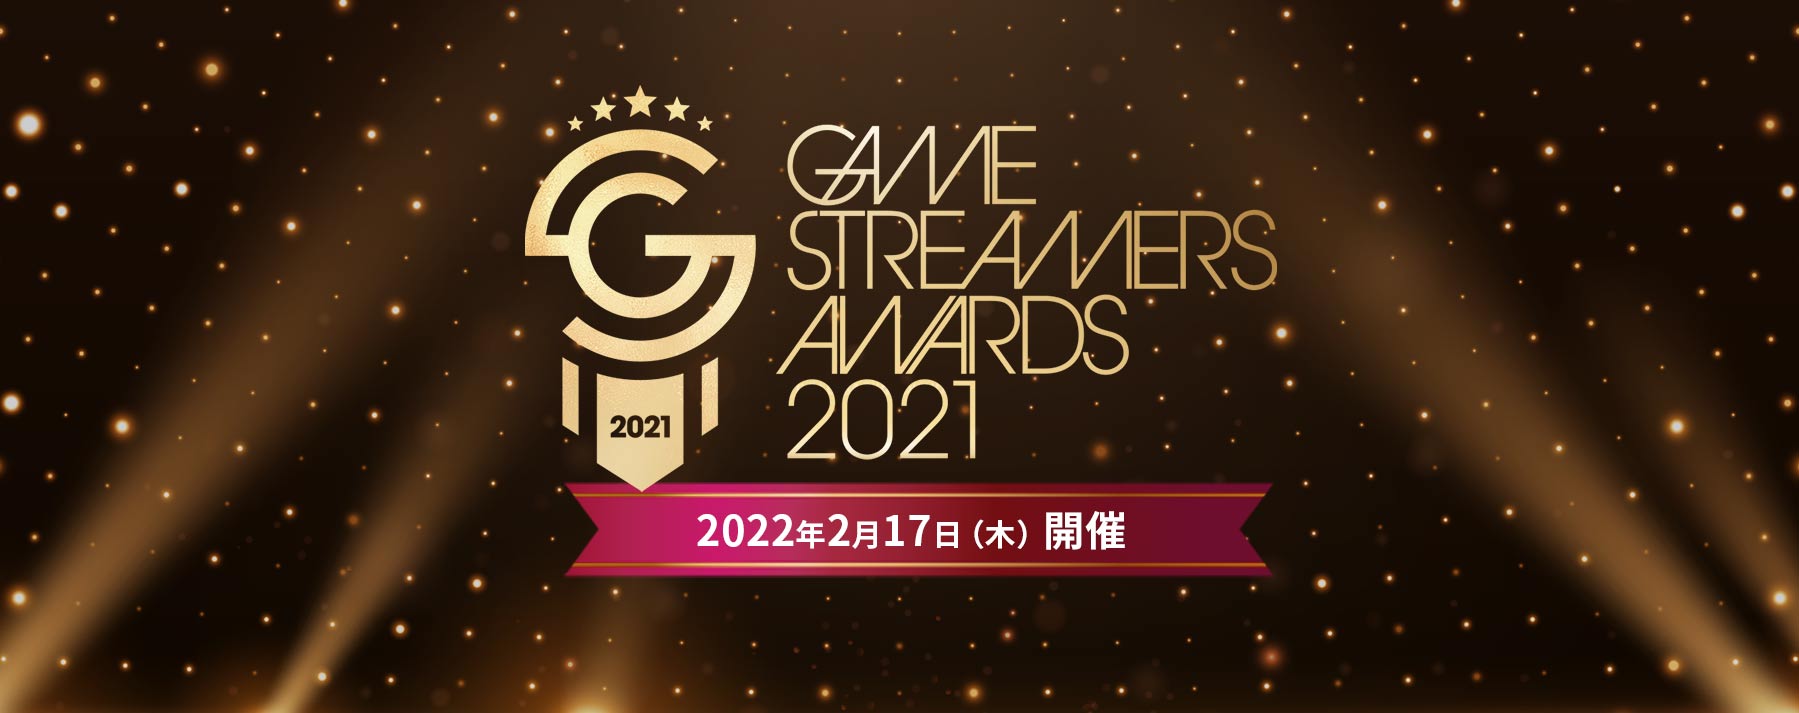 GAME STREAMER AWARD 2021 2022年2月17日(木) 開催